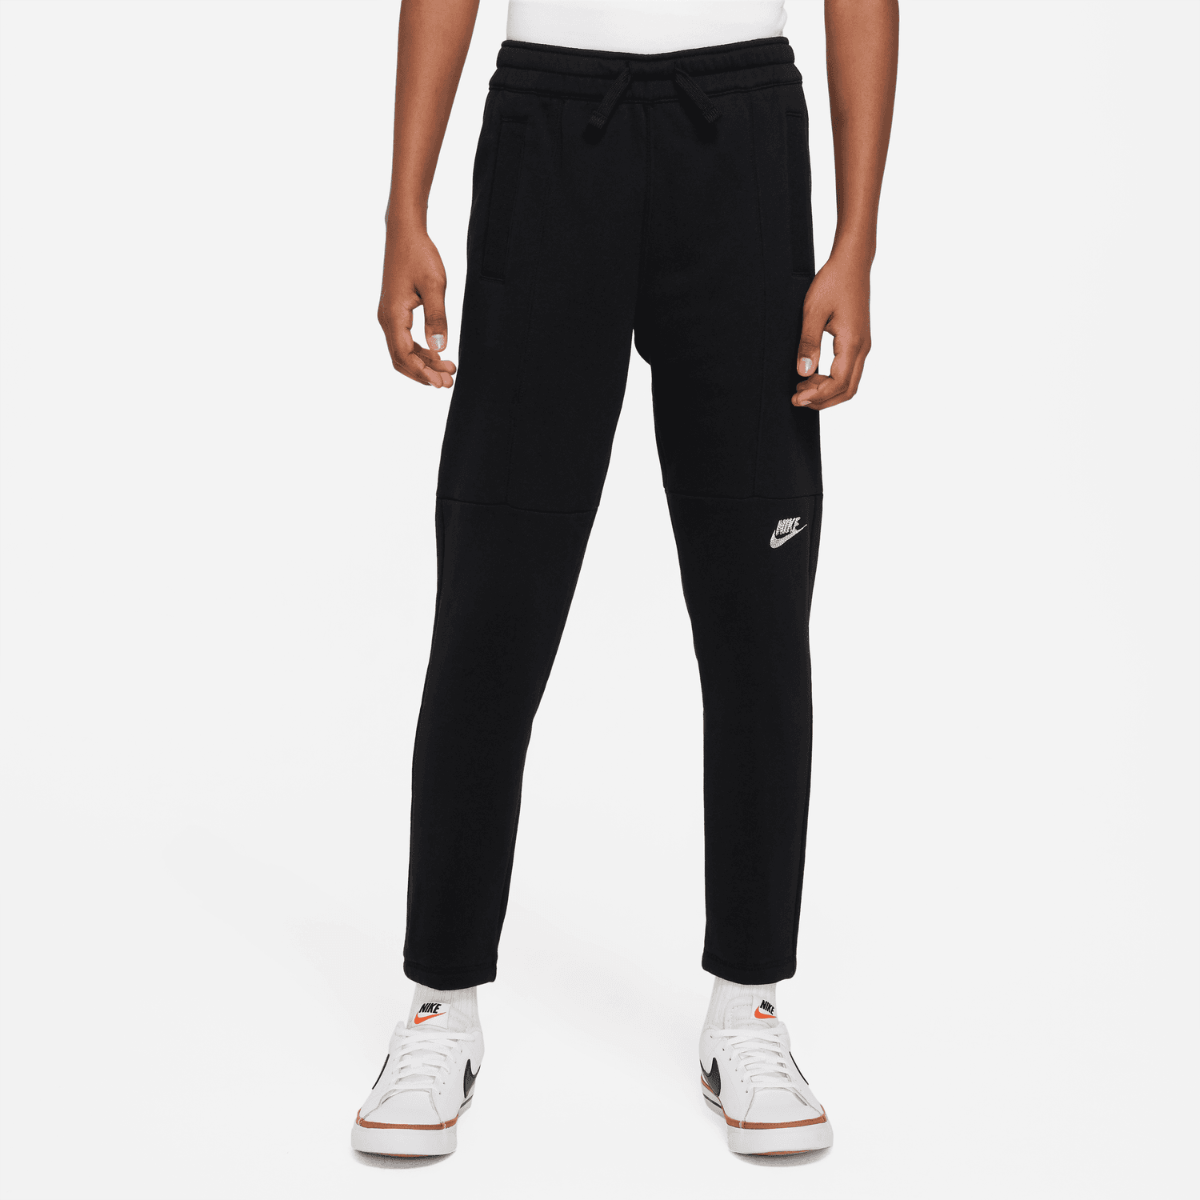 Pantalón Nike Sportswear Amplify Junior - Negro/Blanco